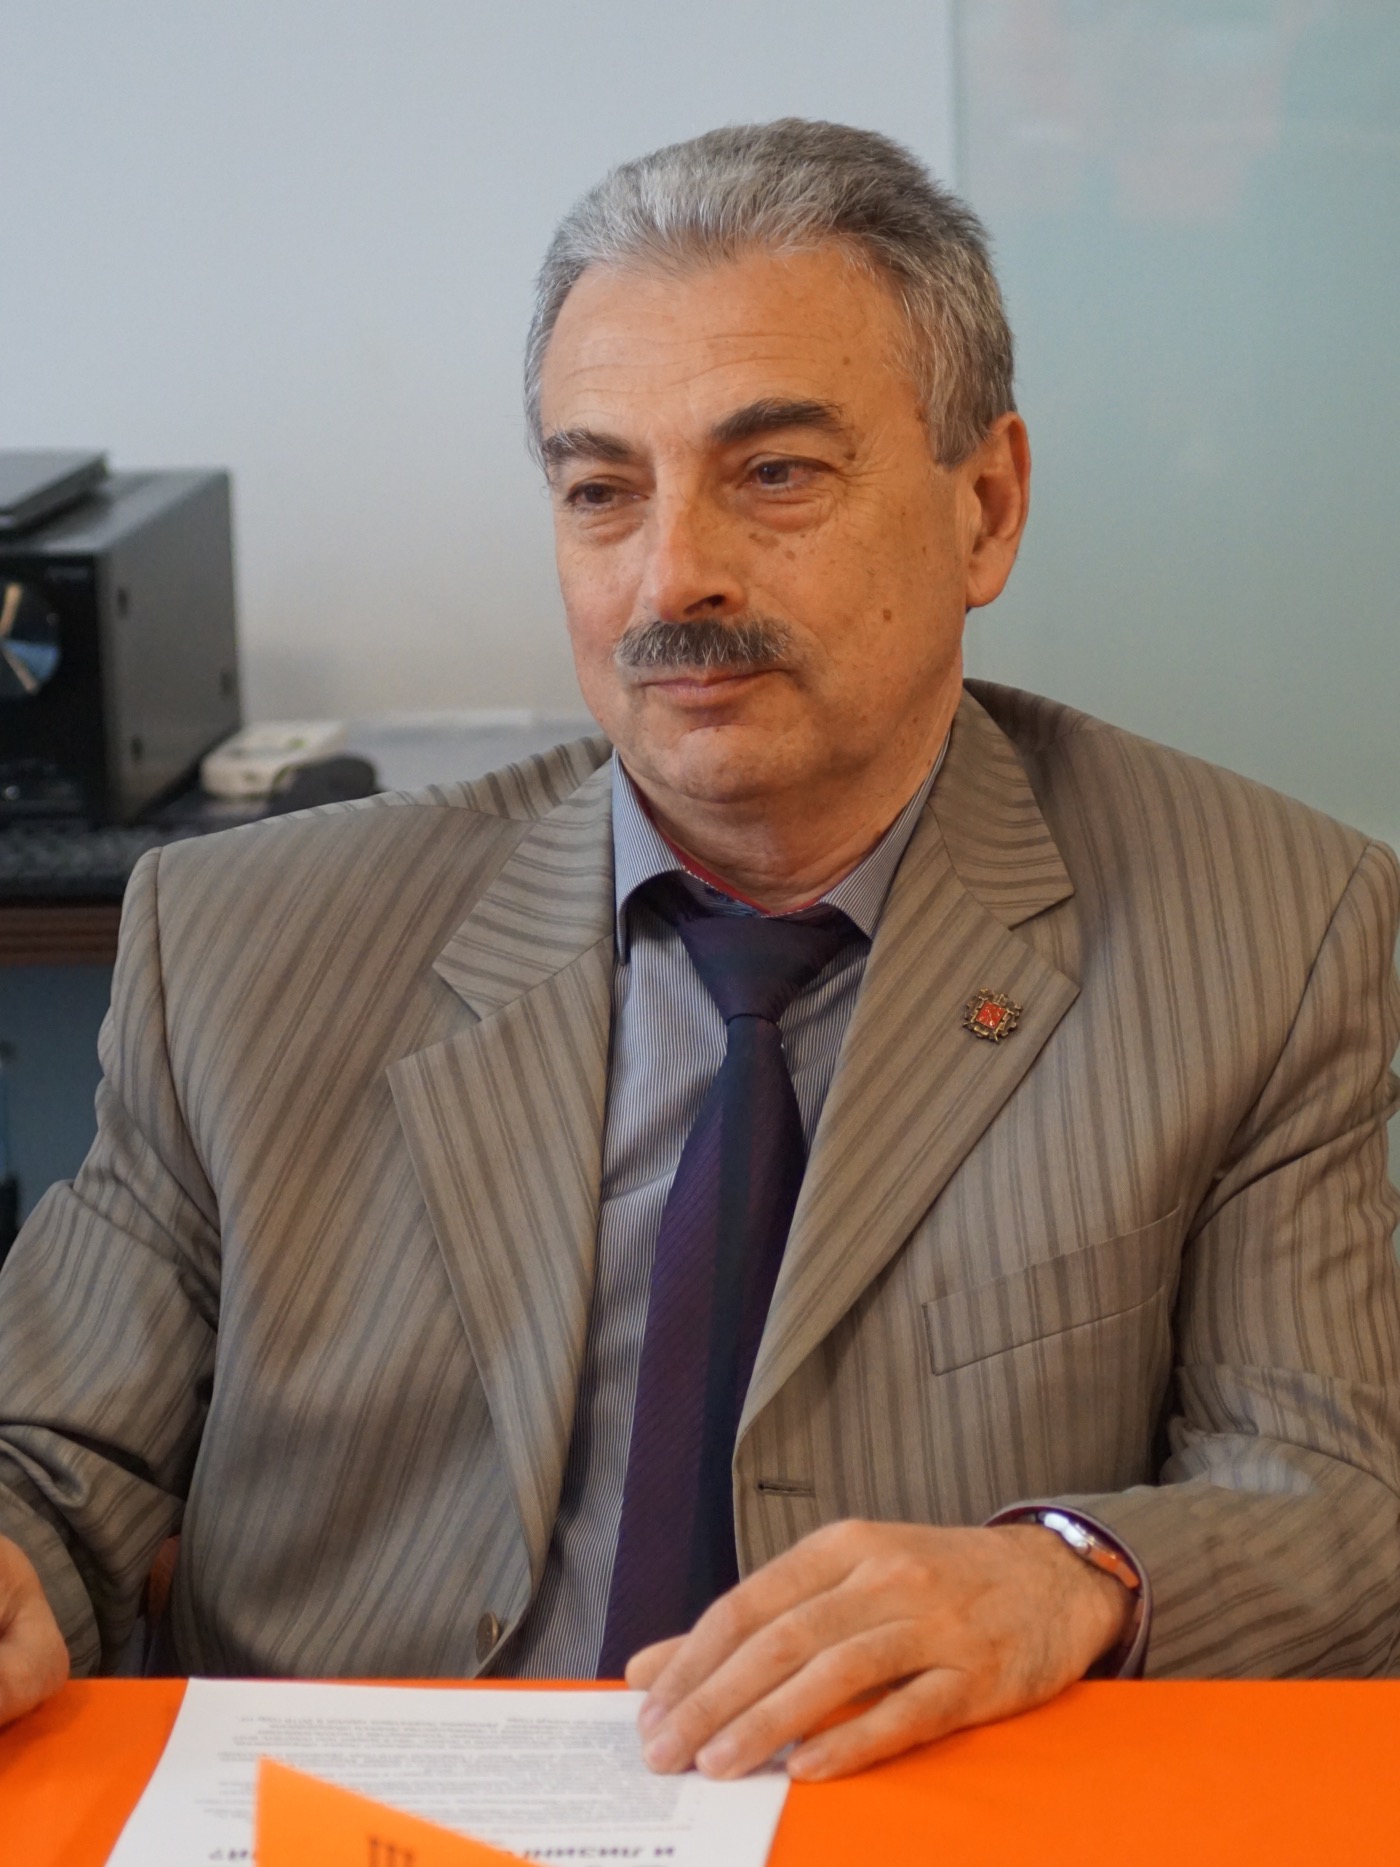 Шапиро Евгений Зиновьевич — директор ФРП СПб 